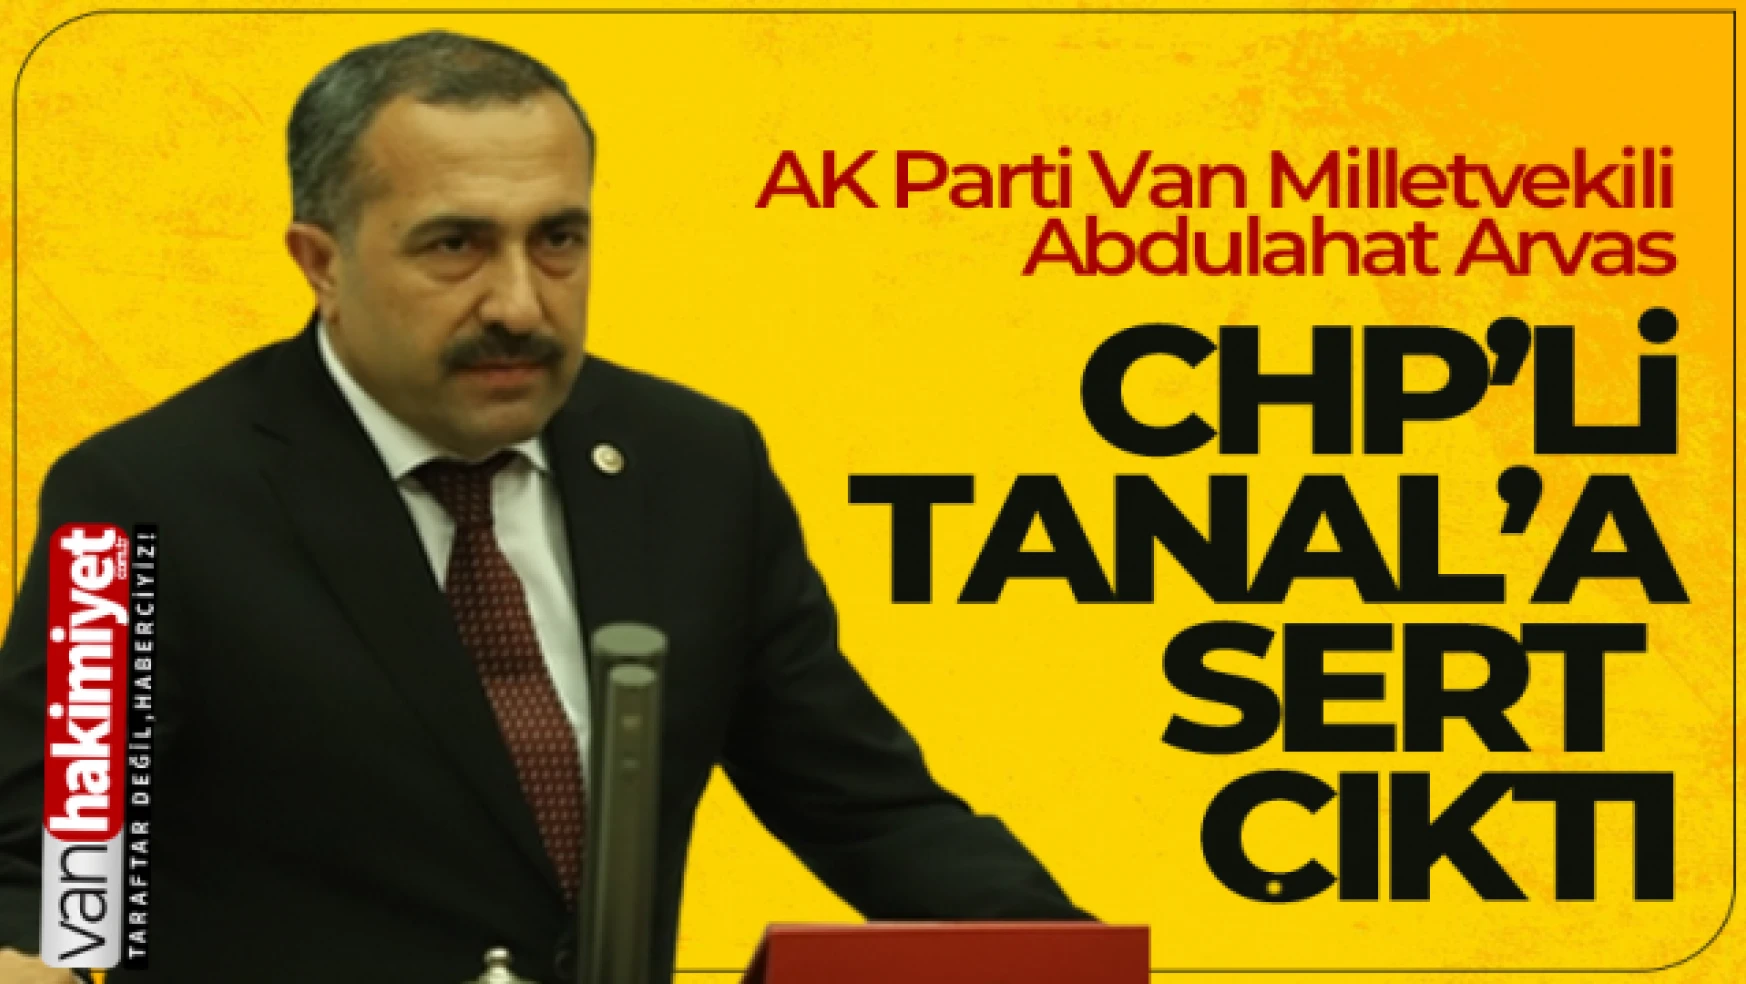 AK Parti Milletvekili Abdulahat Arvas, CHP'li Tanal'a Sert Çıktı!